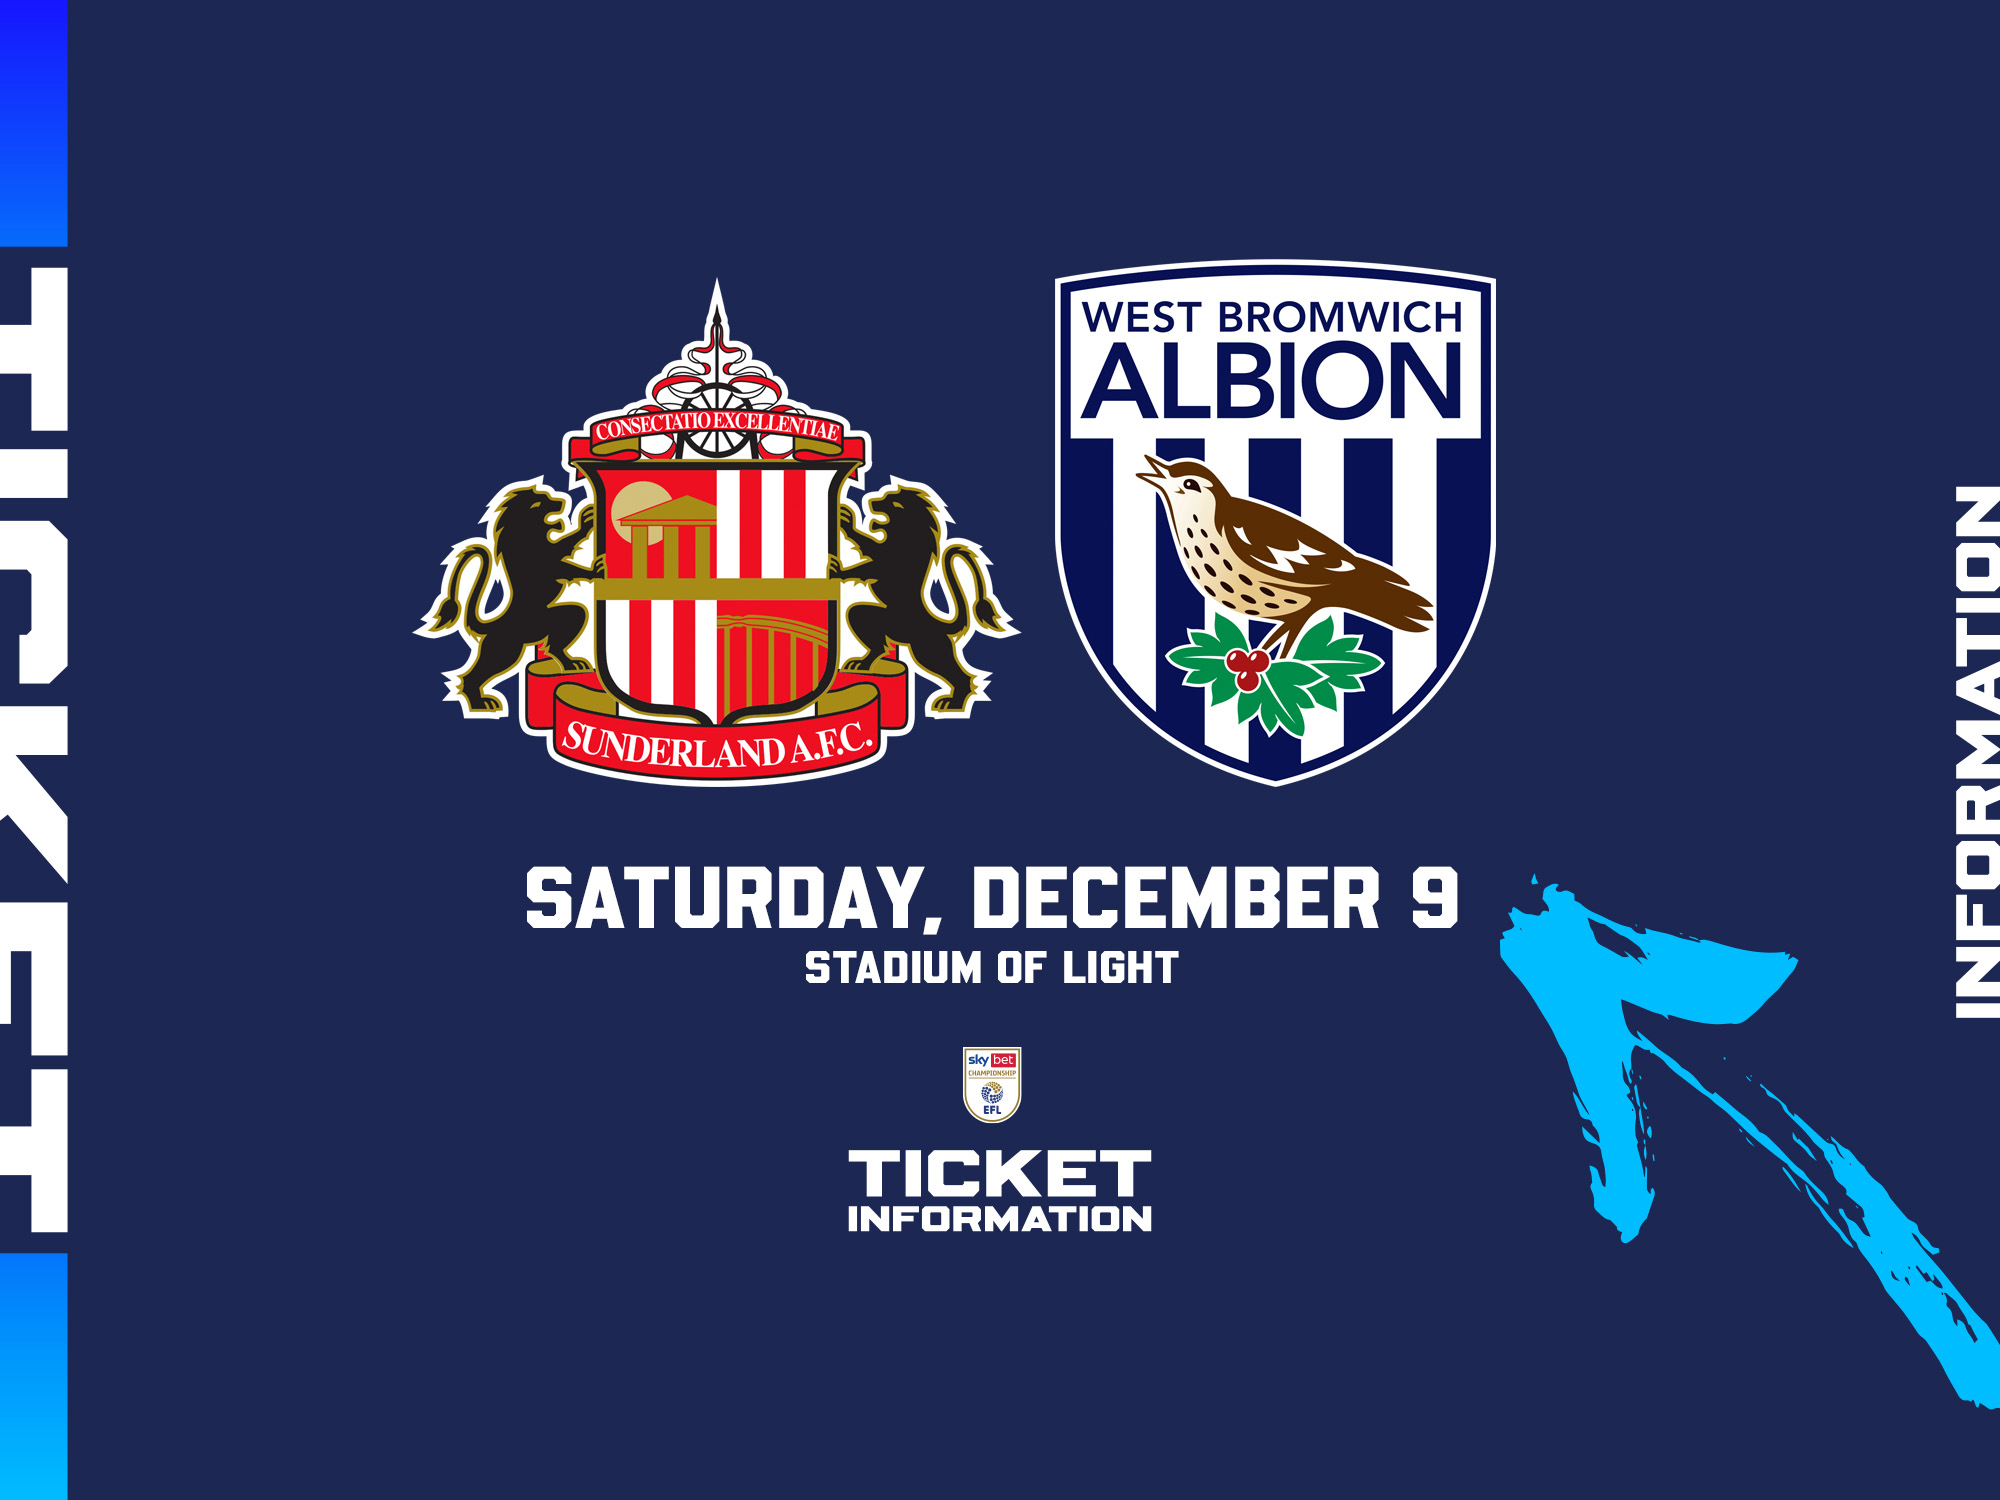 Sunderland & WBA badges on the ticket graphic 